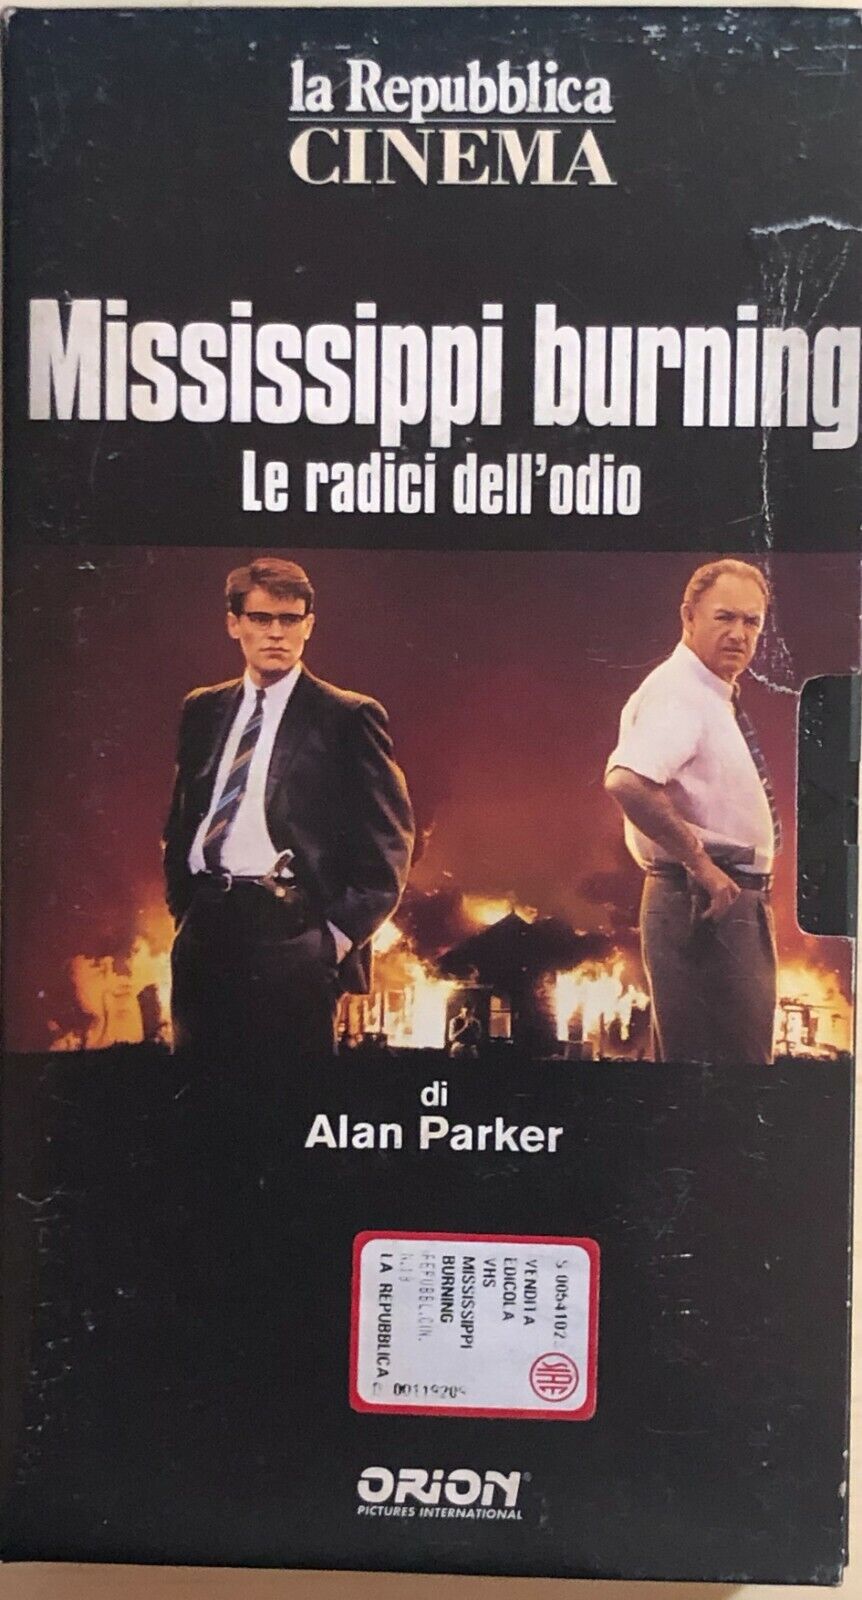 Mississippi burning, Le radici delL'odio VHS di Alan Parker,1991, Orion Pictures